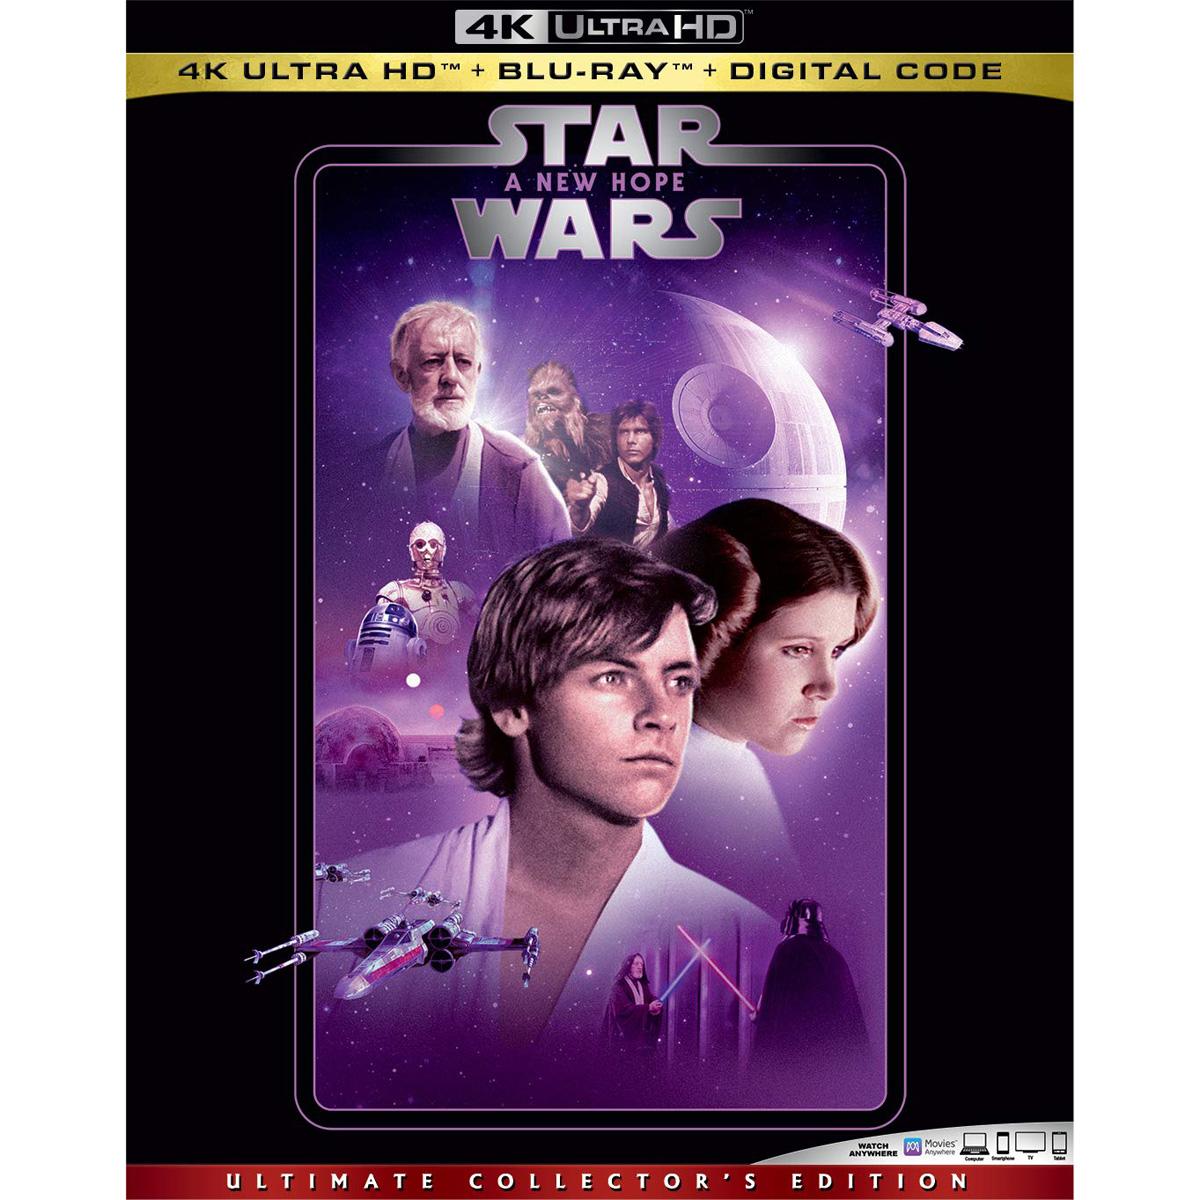 Star Wars 4K UHD Blu-rays for $12.99